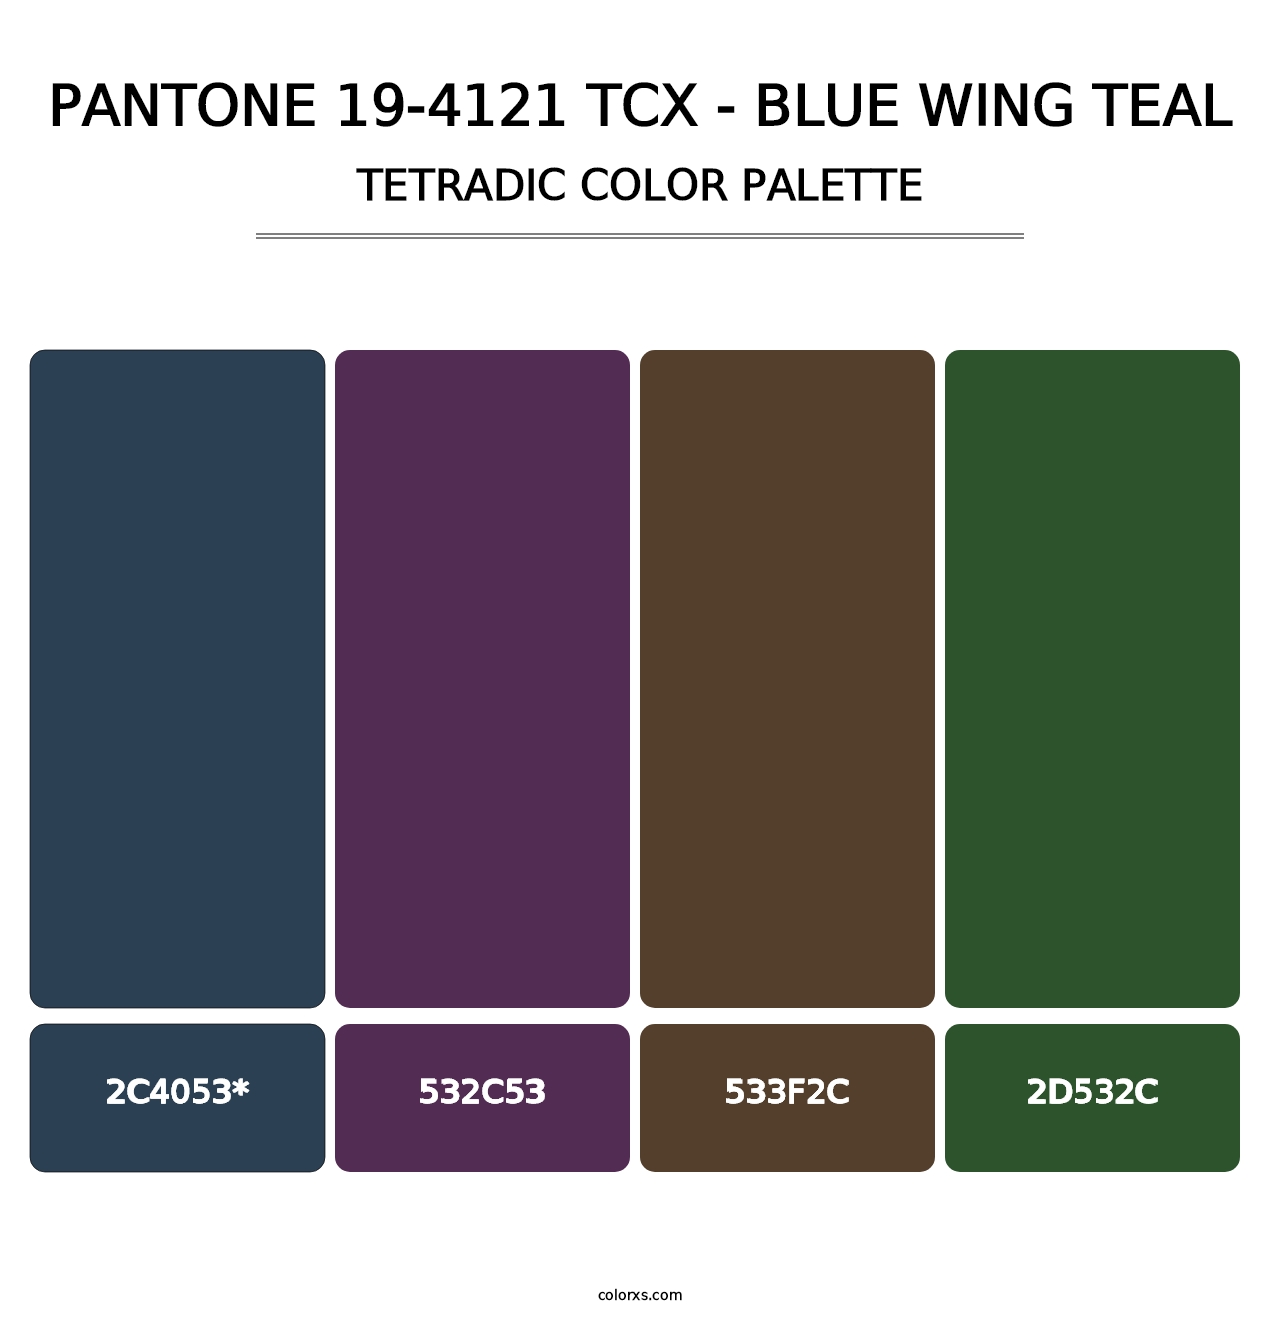 PANTONE 19-4121 TCX - Blue Wing Teal - Tetradic Color Palette